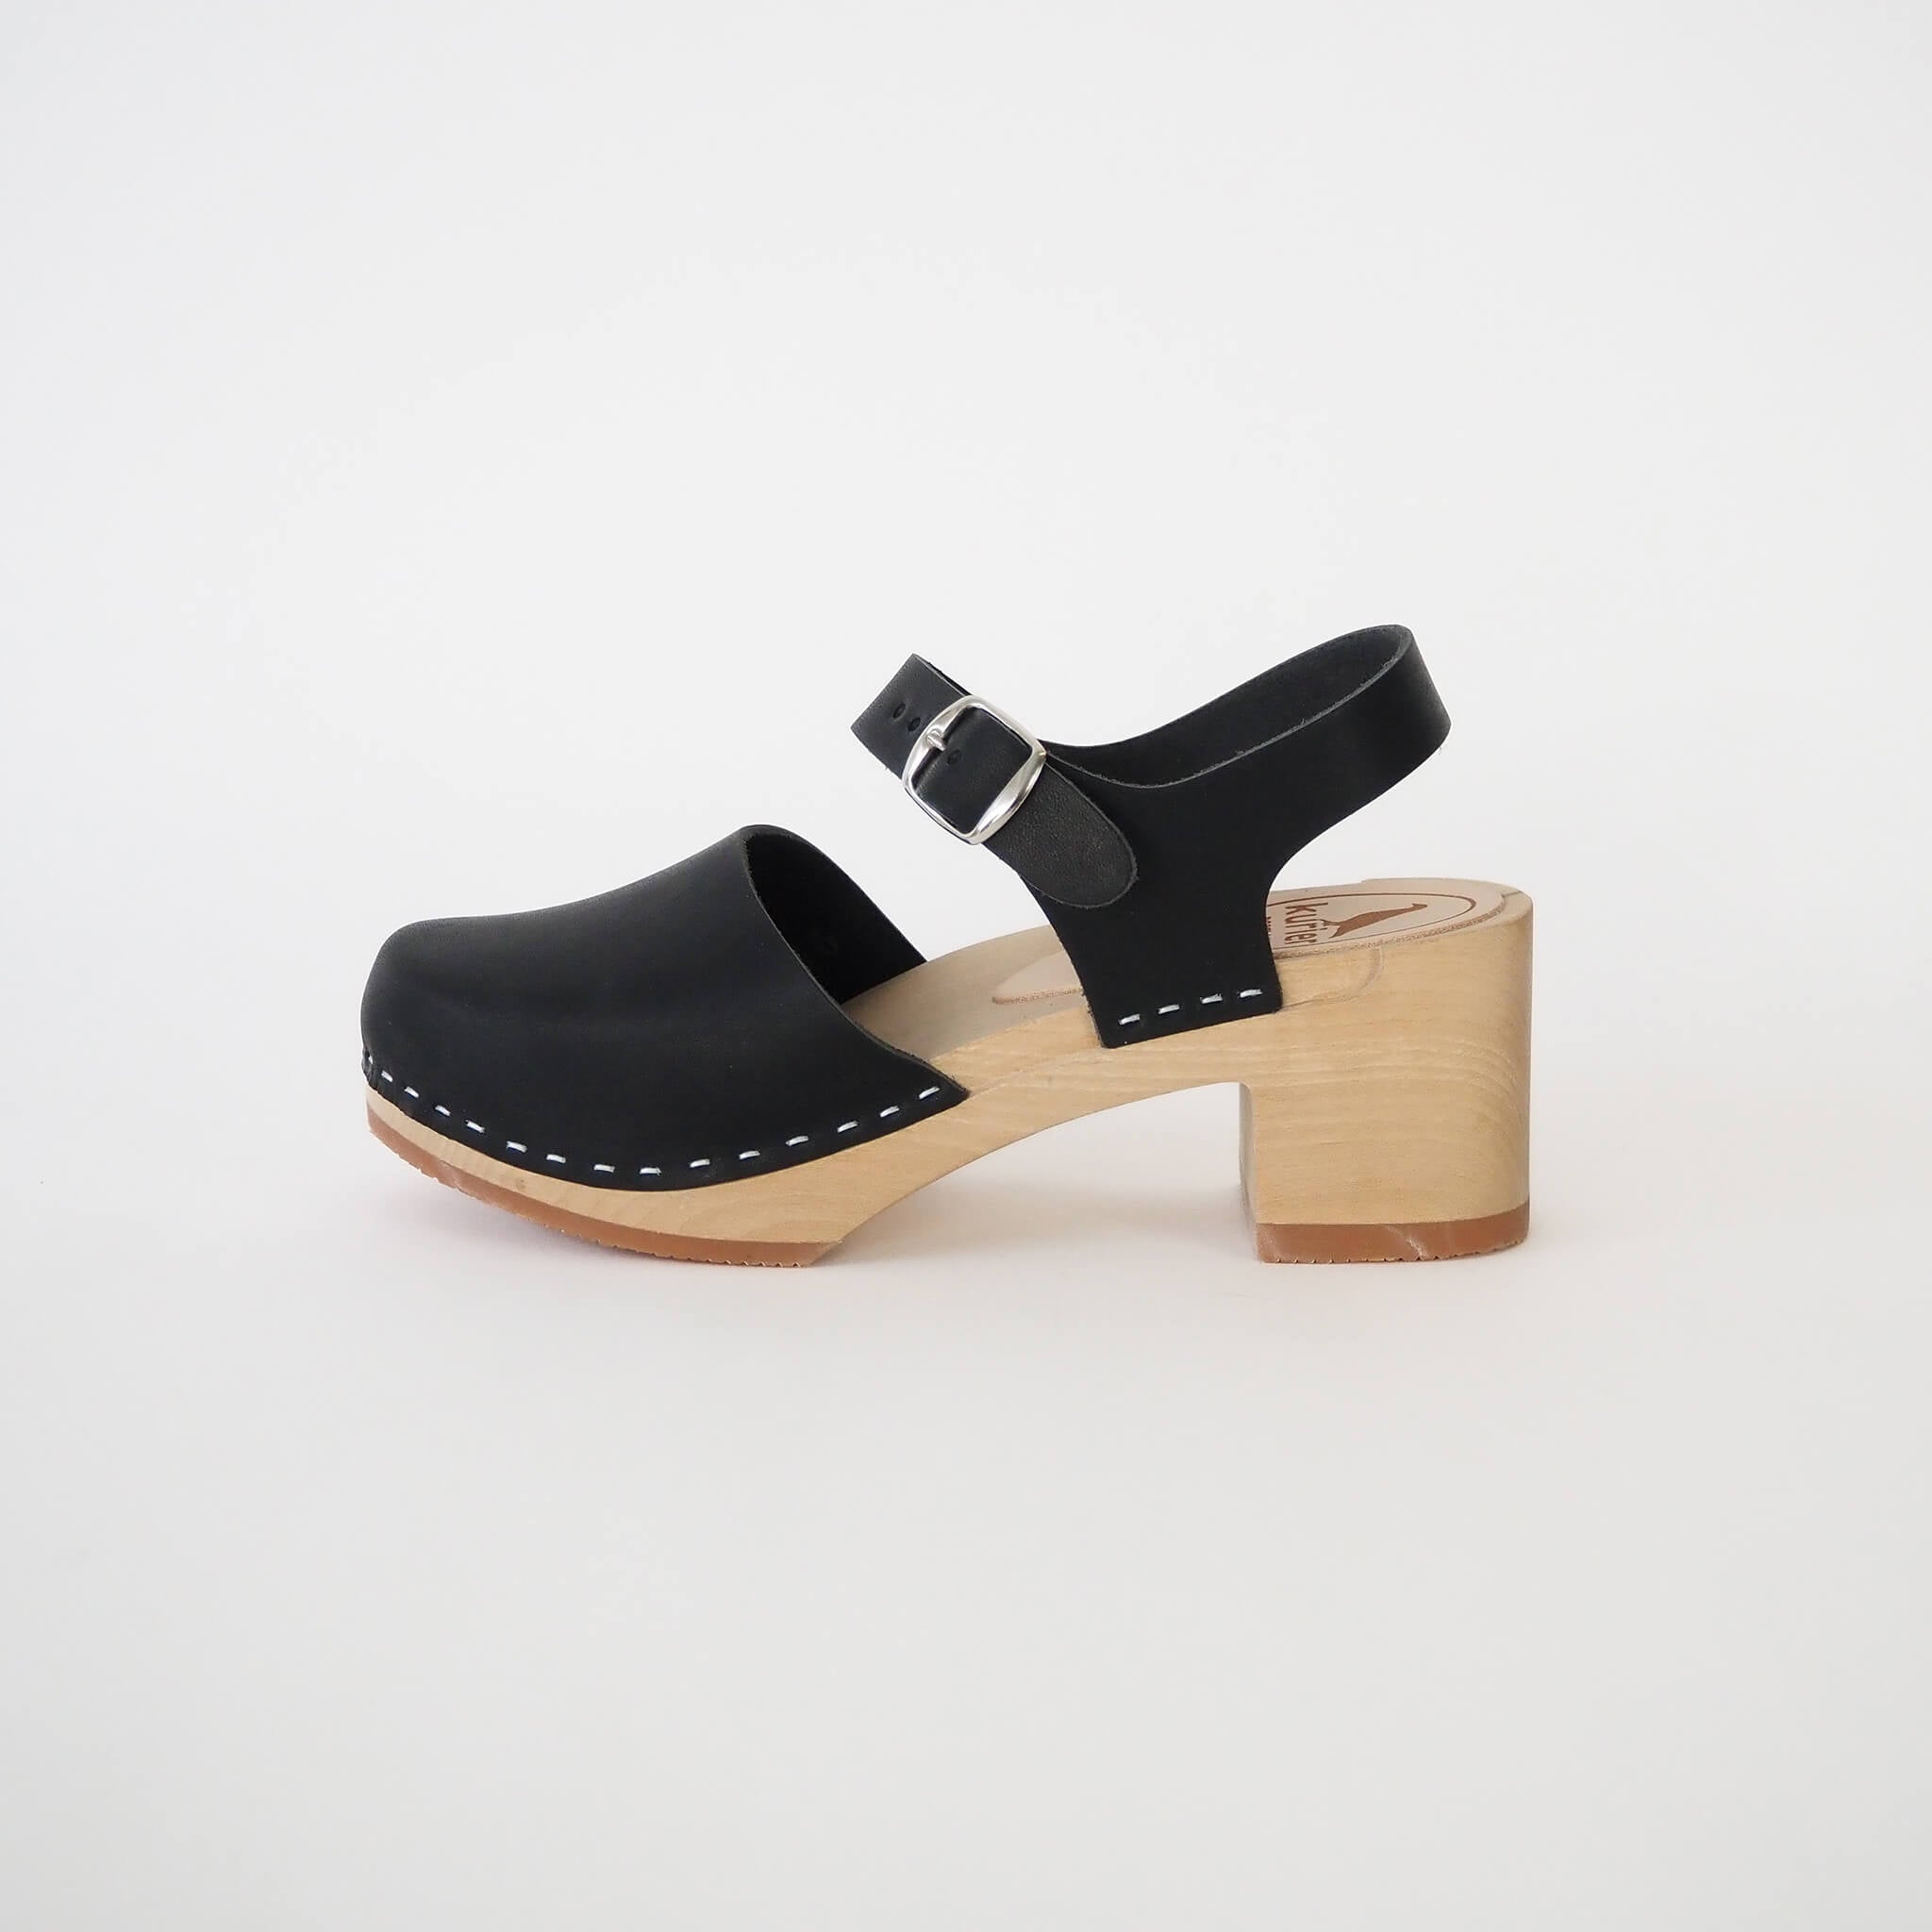 charlie clog high heel closed toe handmade leather/wood - coal side view